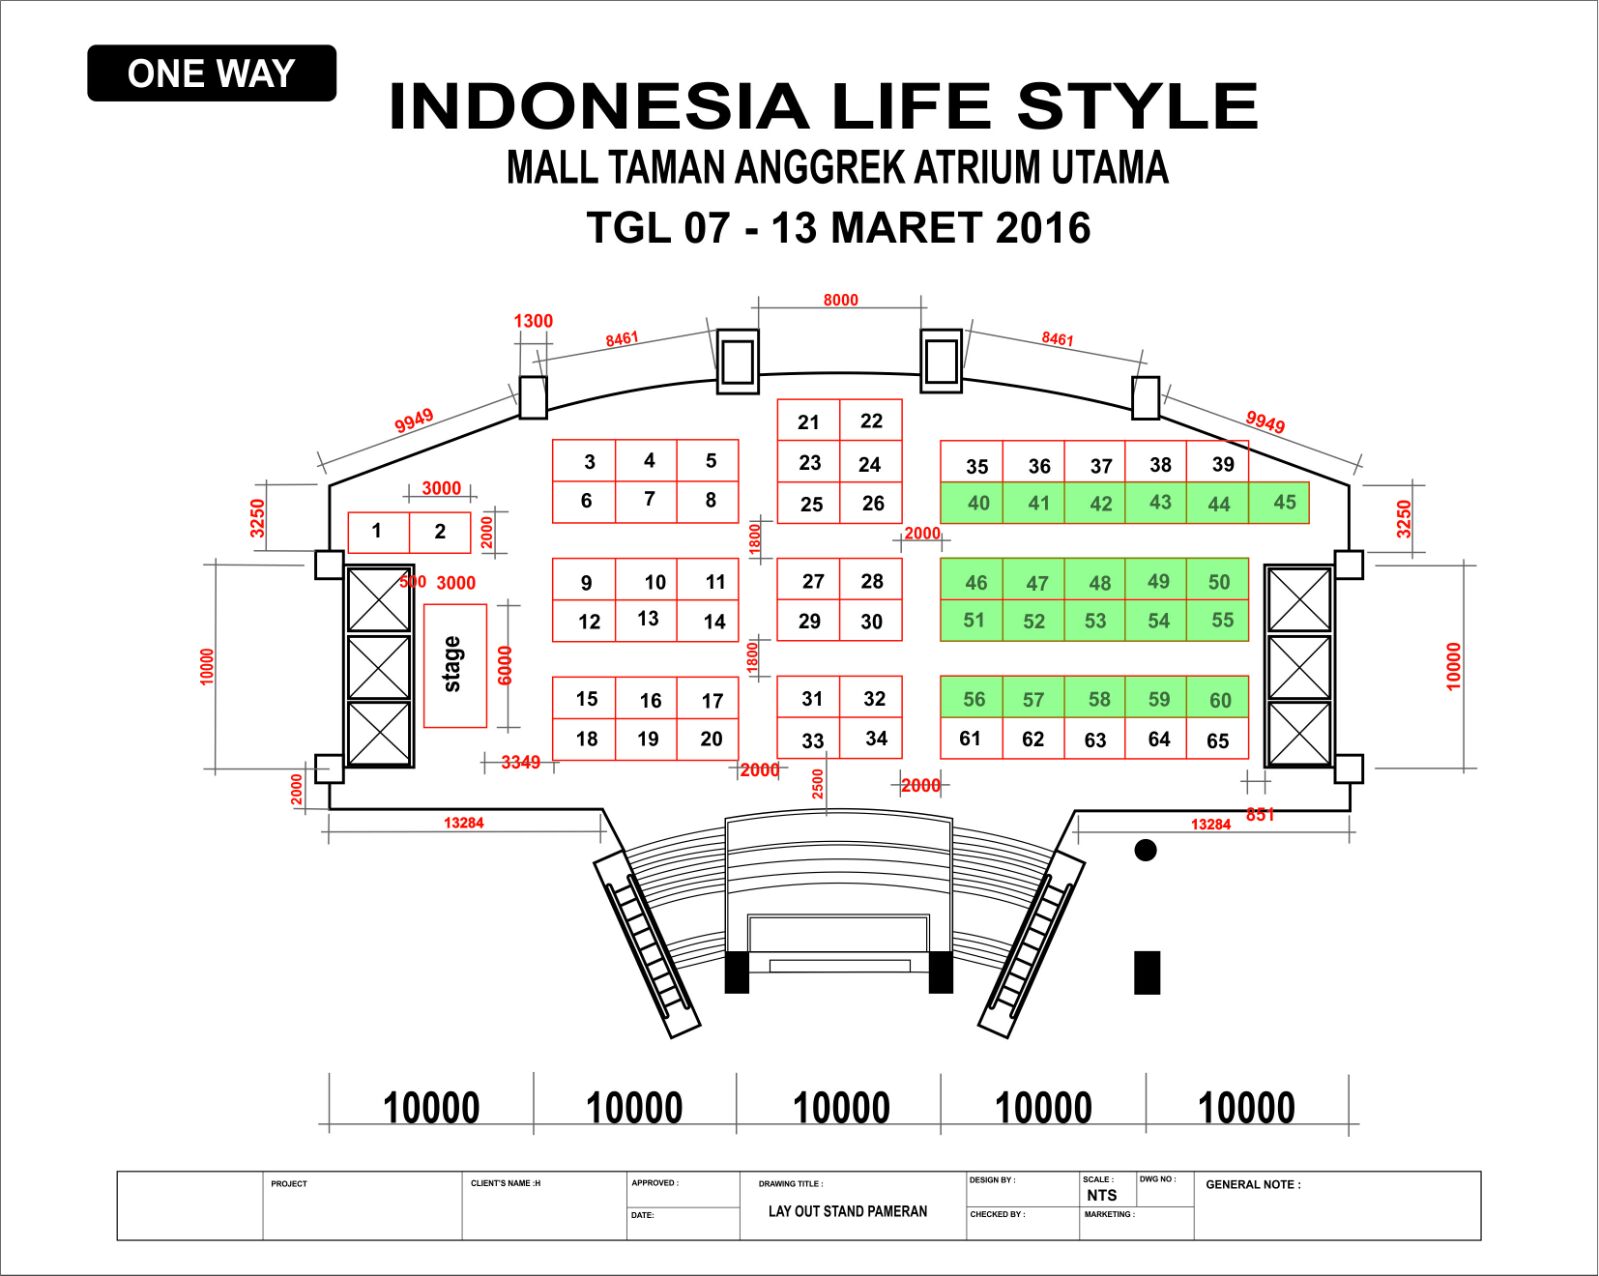 Event Jakarta: Event "Indonesia Life Style" at Mall Taman Anggrek